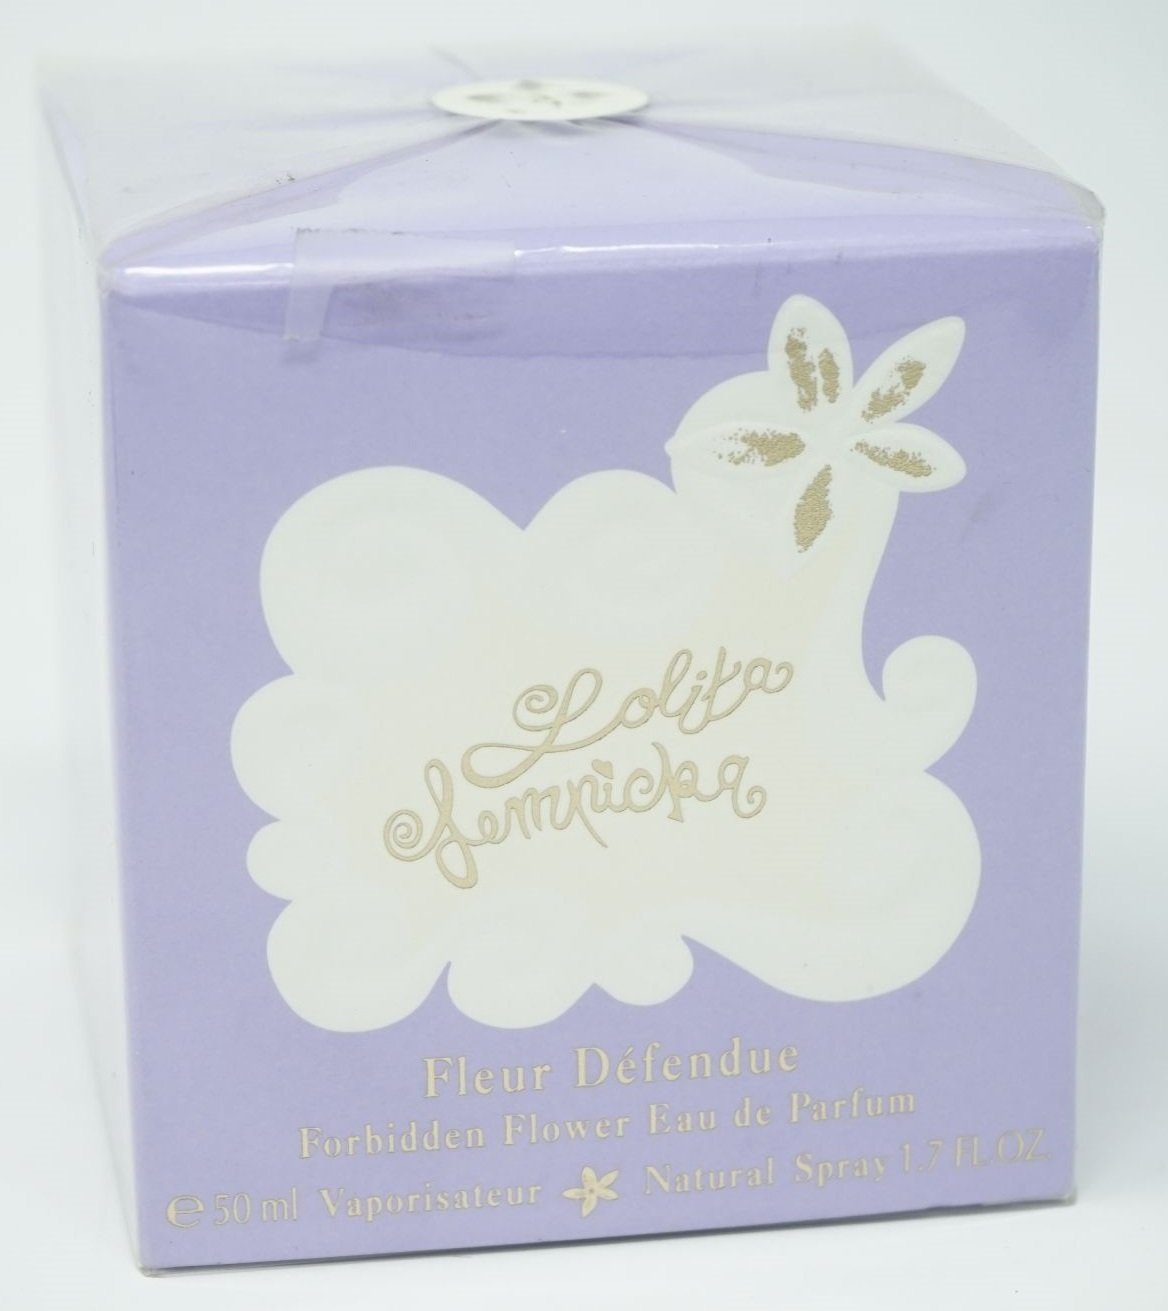 Lolita Lempicka Eau Parfum Spray Fleur ml Eau de Lempicka de 50 Defendue Lolita Parfum